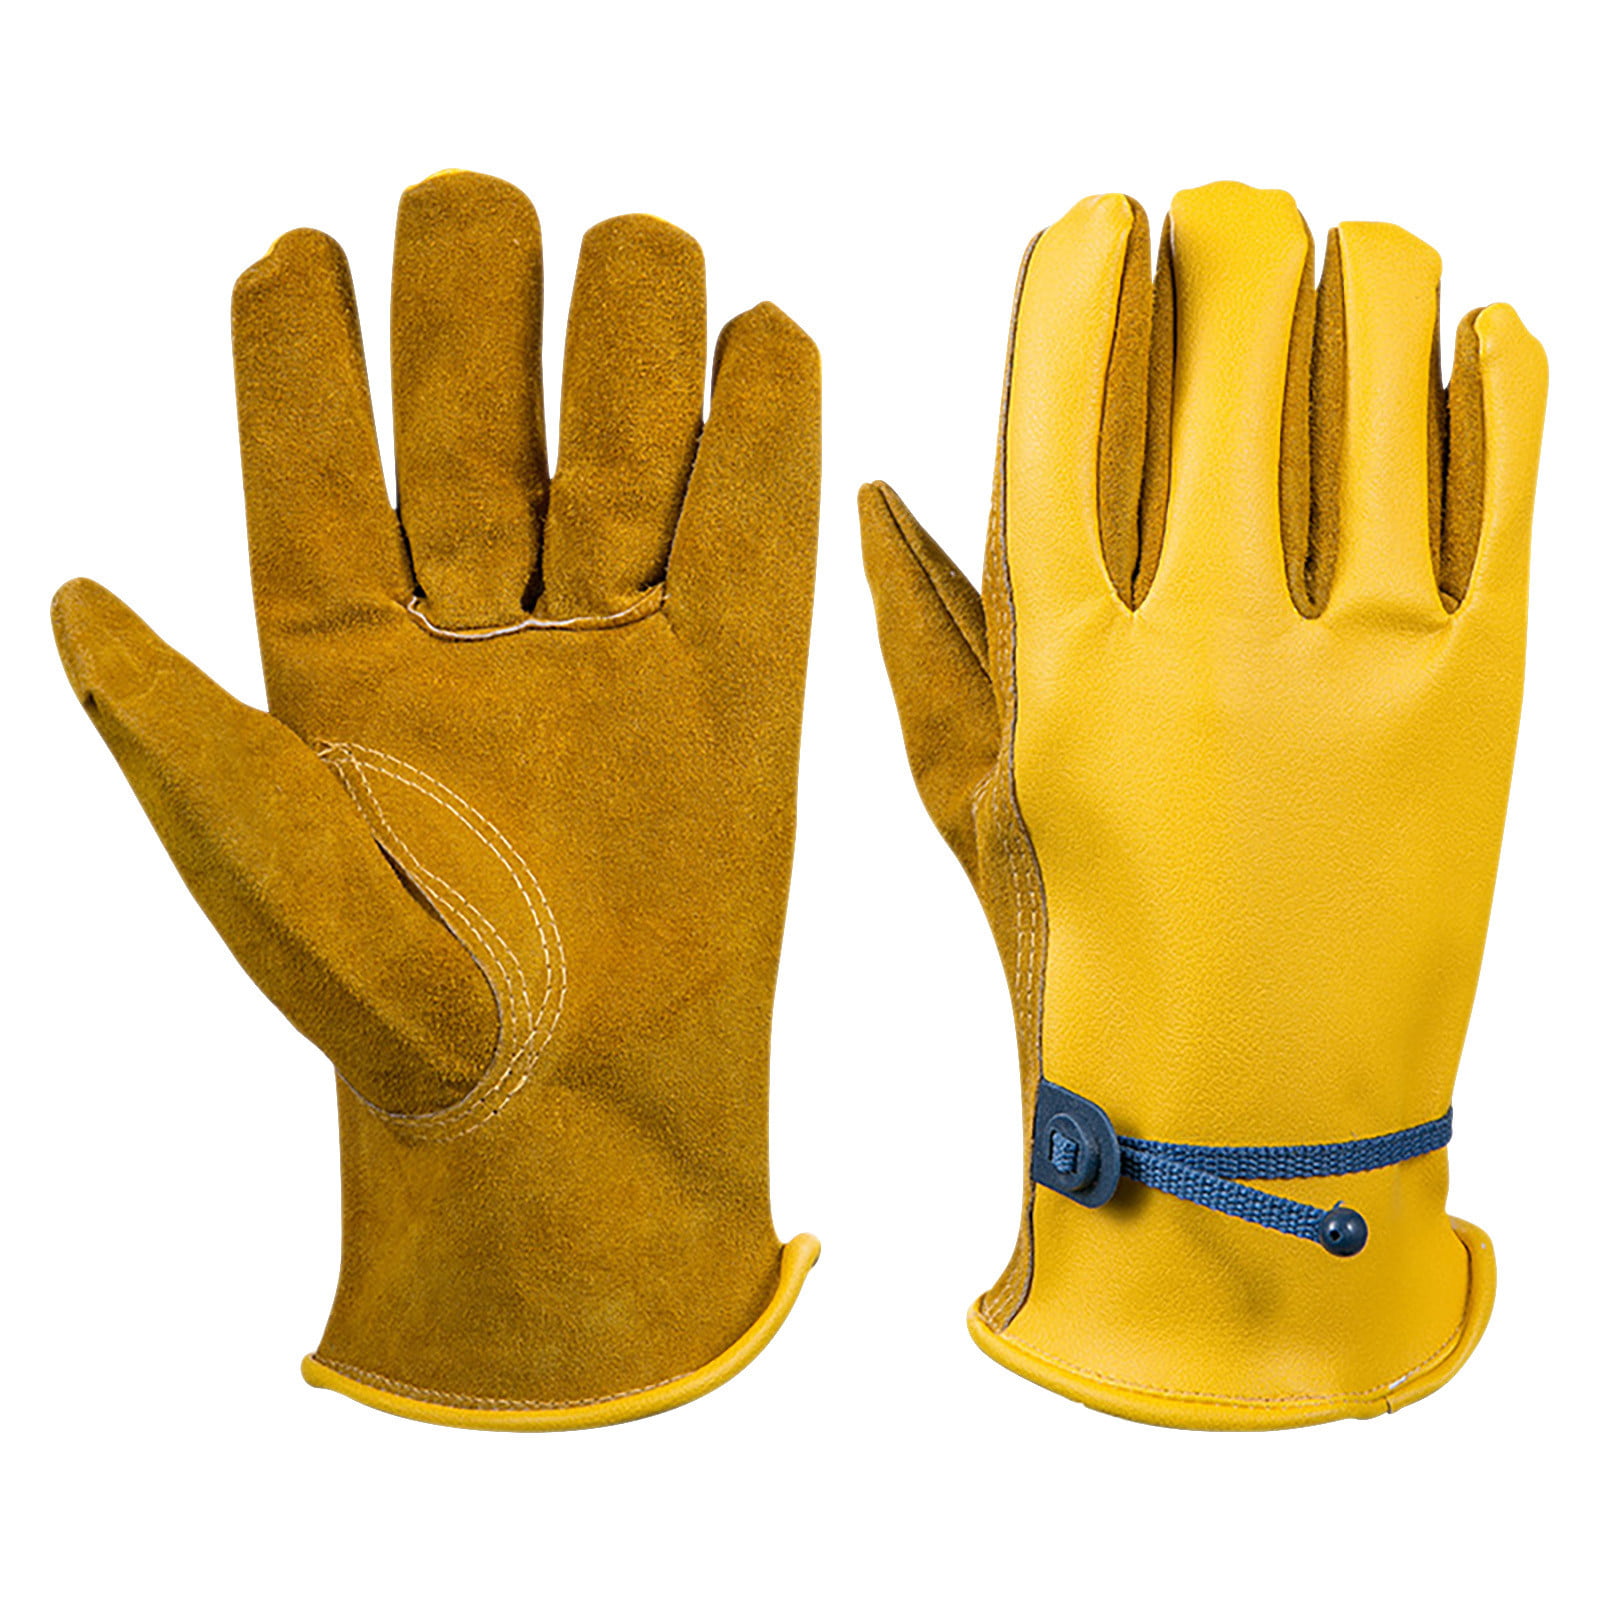 Black Nylon PU Dipped Gloves Safety Work Builders Grip Gardening Graft Gloves 